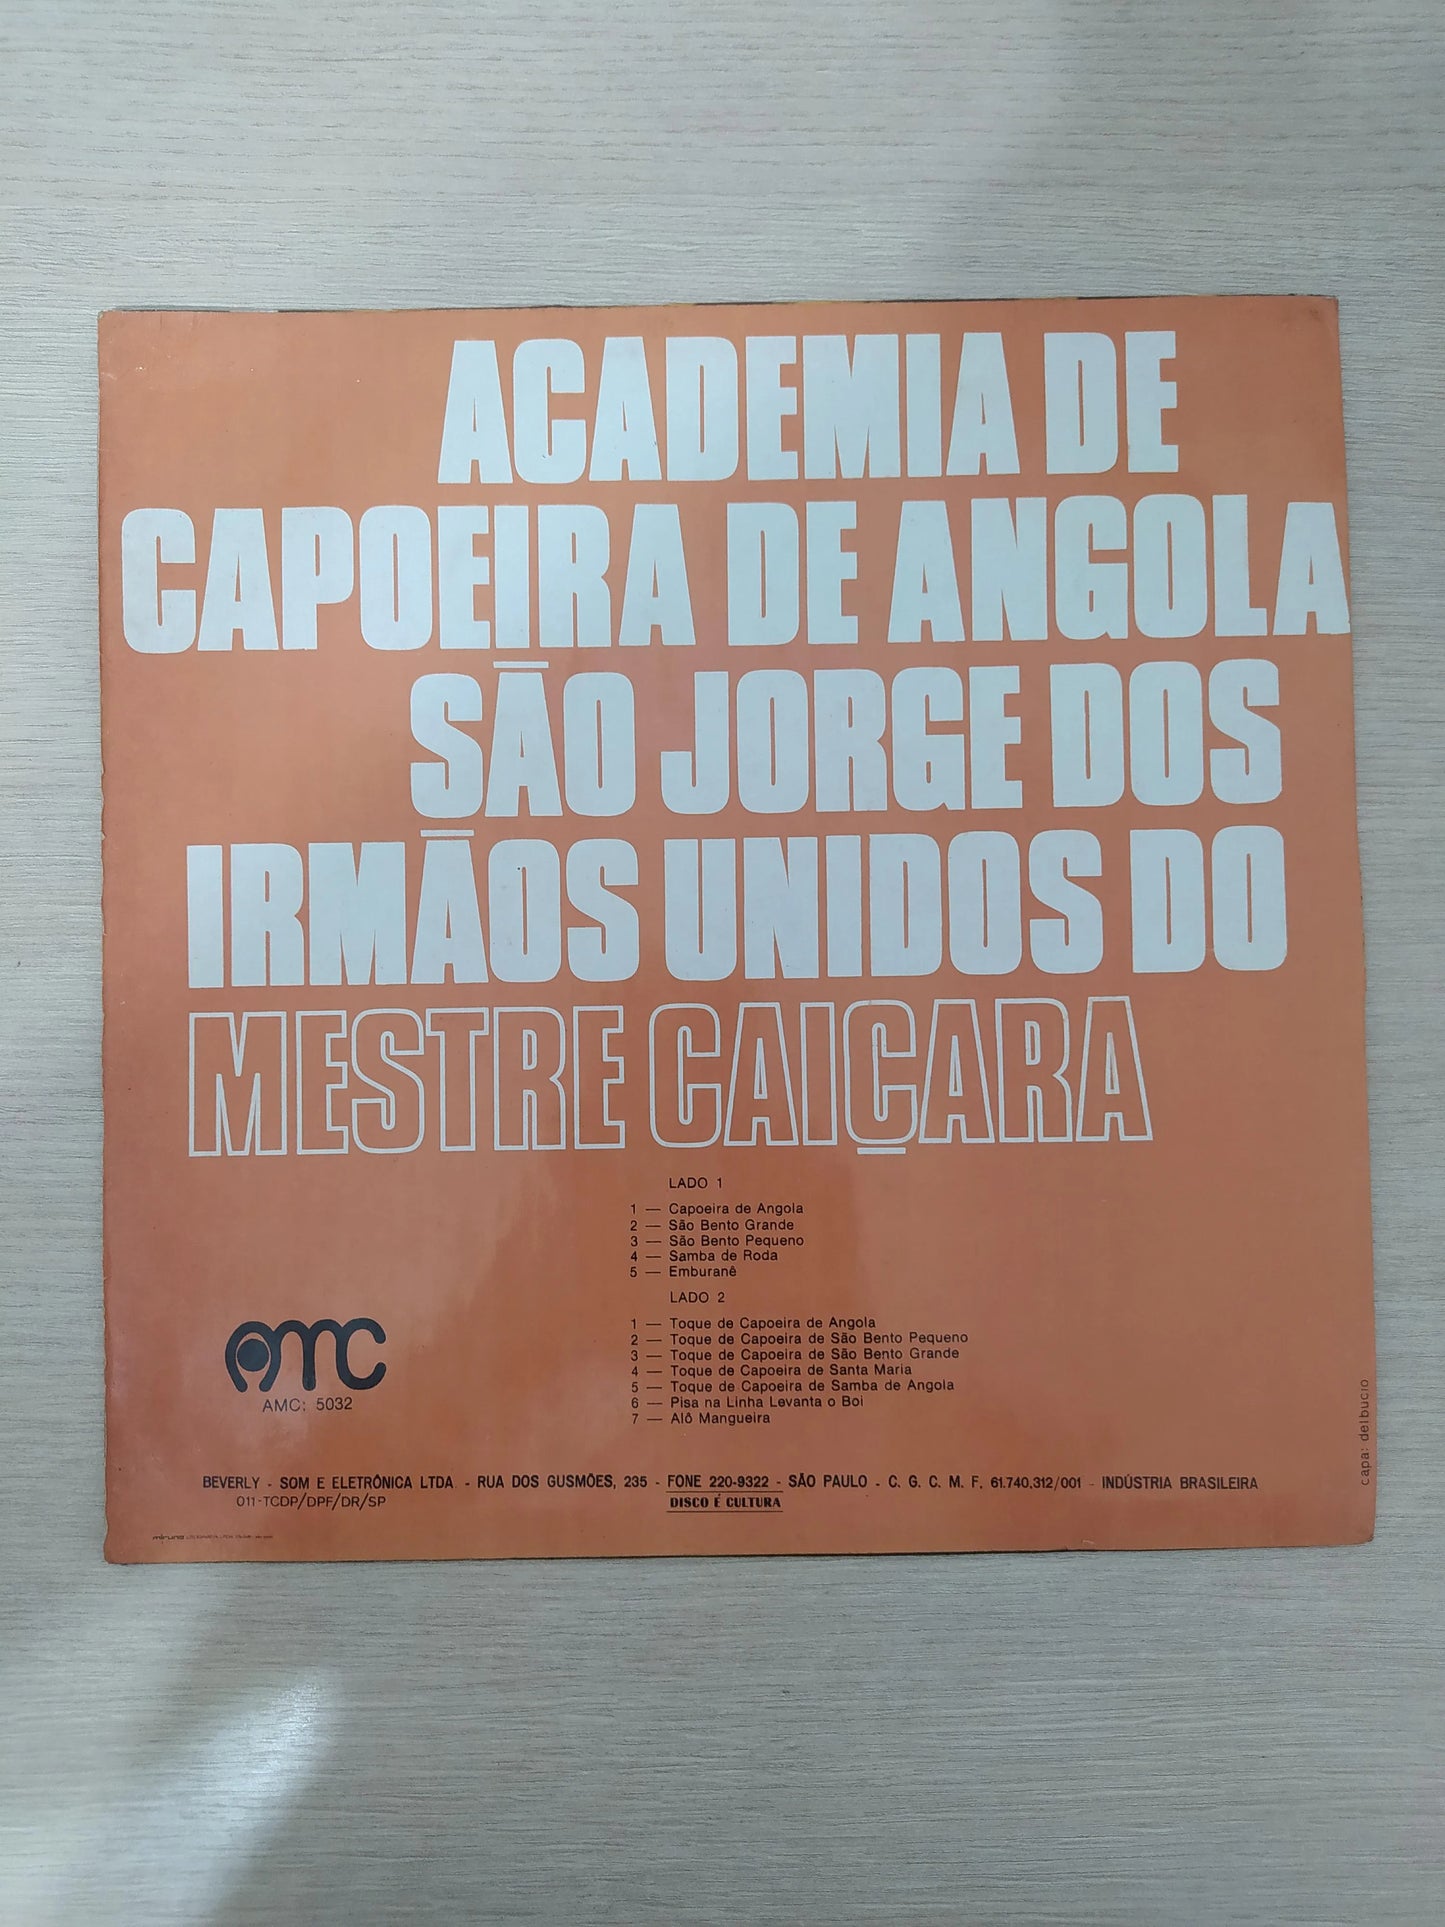 Lp Vinil Mestre Caiçara Academia de Capoeira de Angola